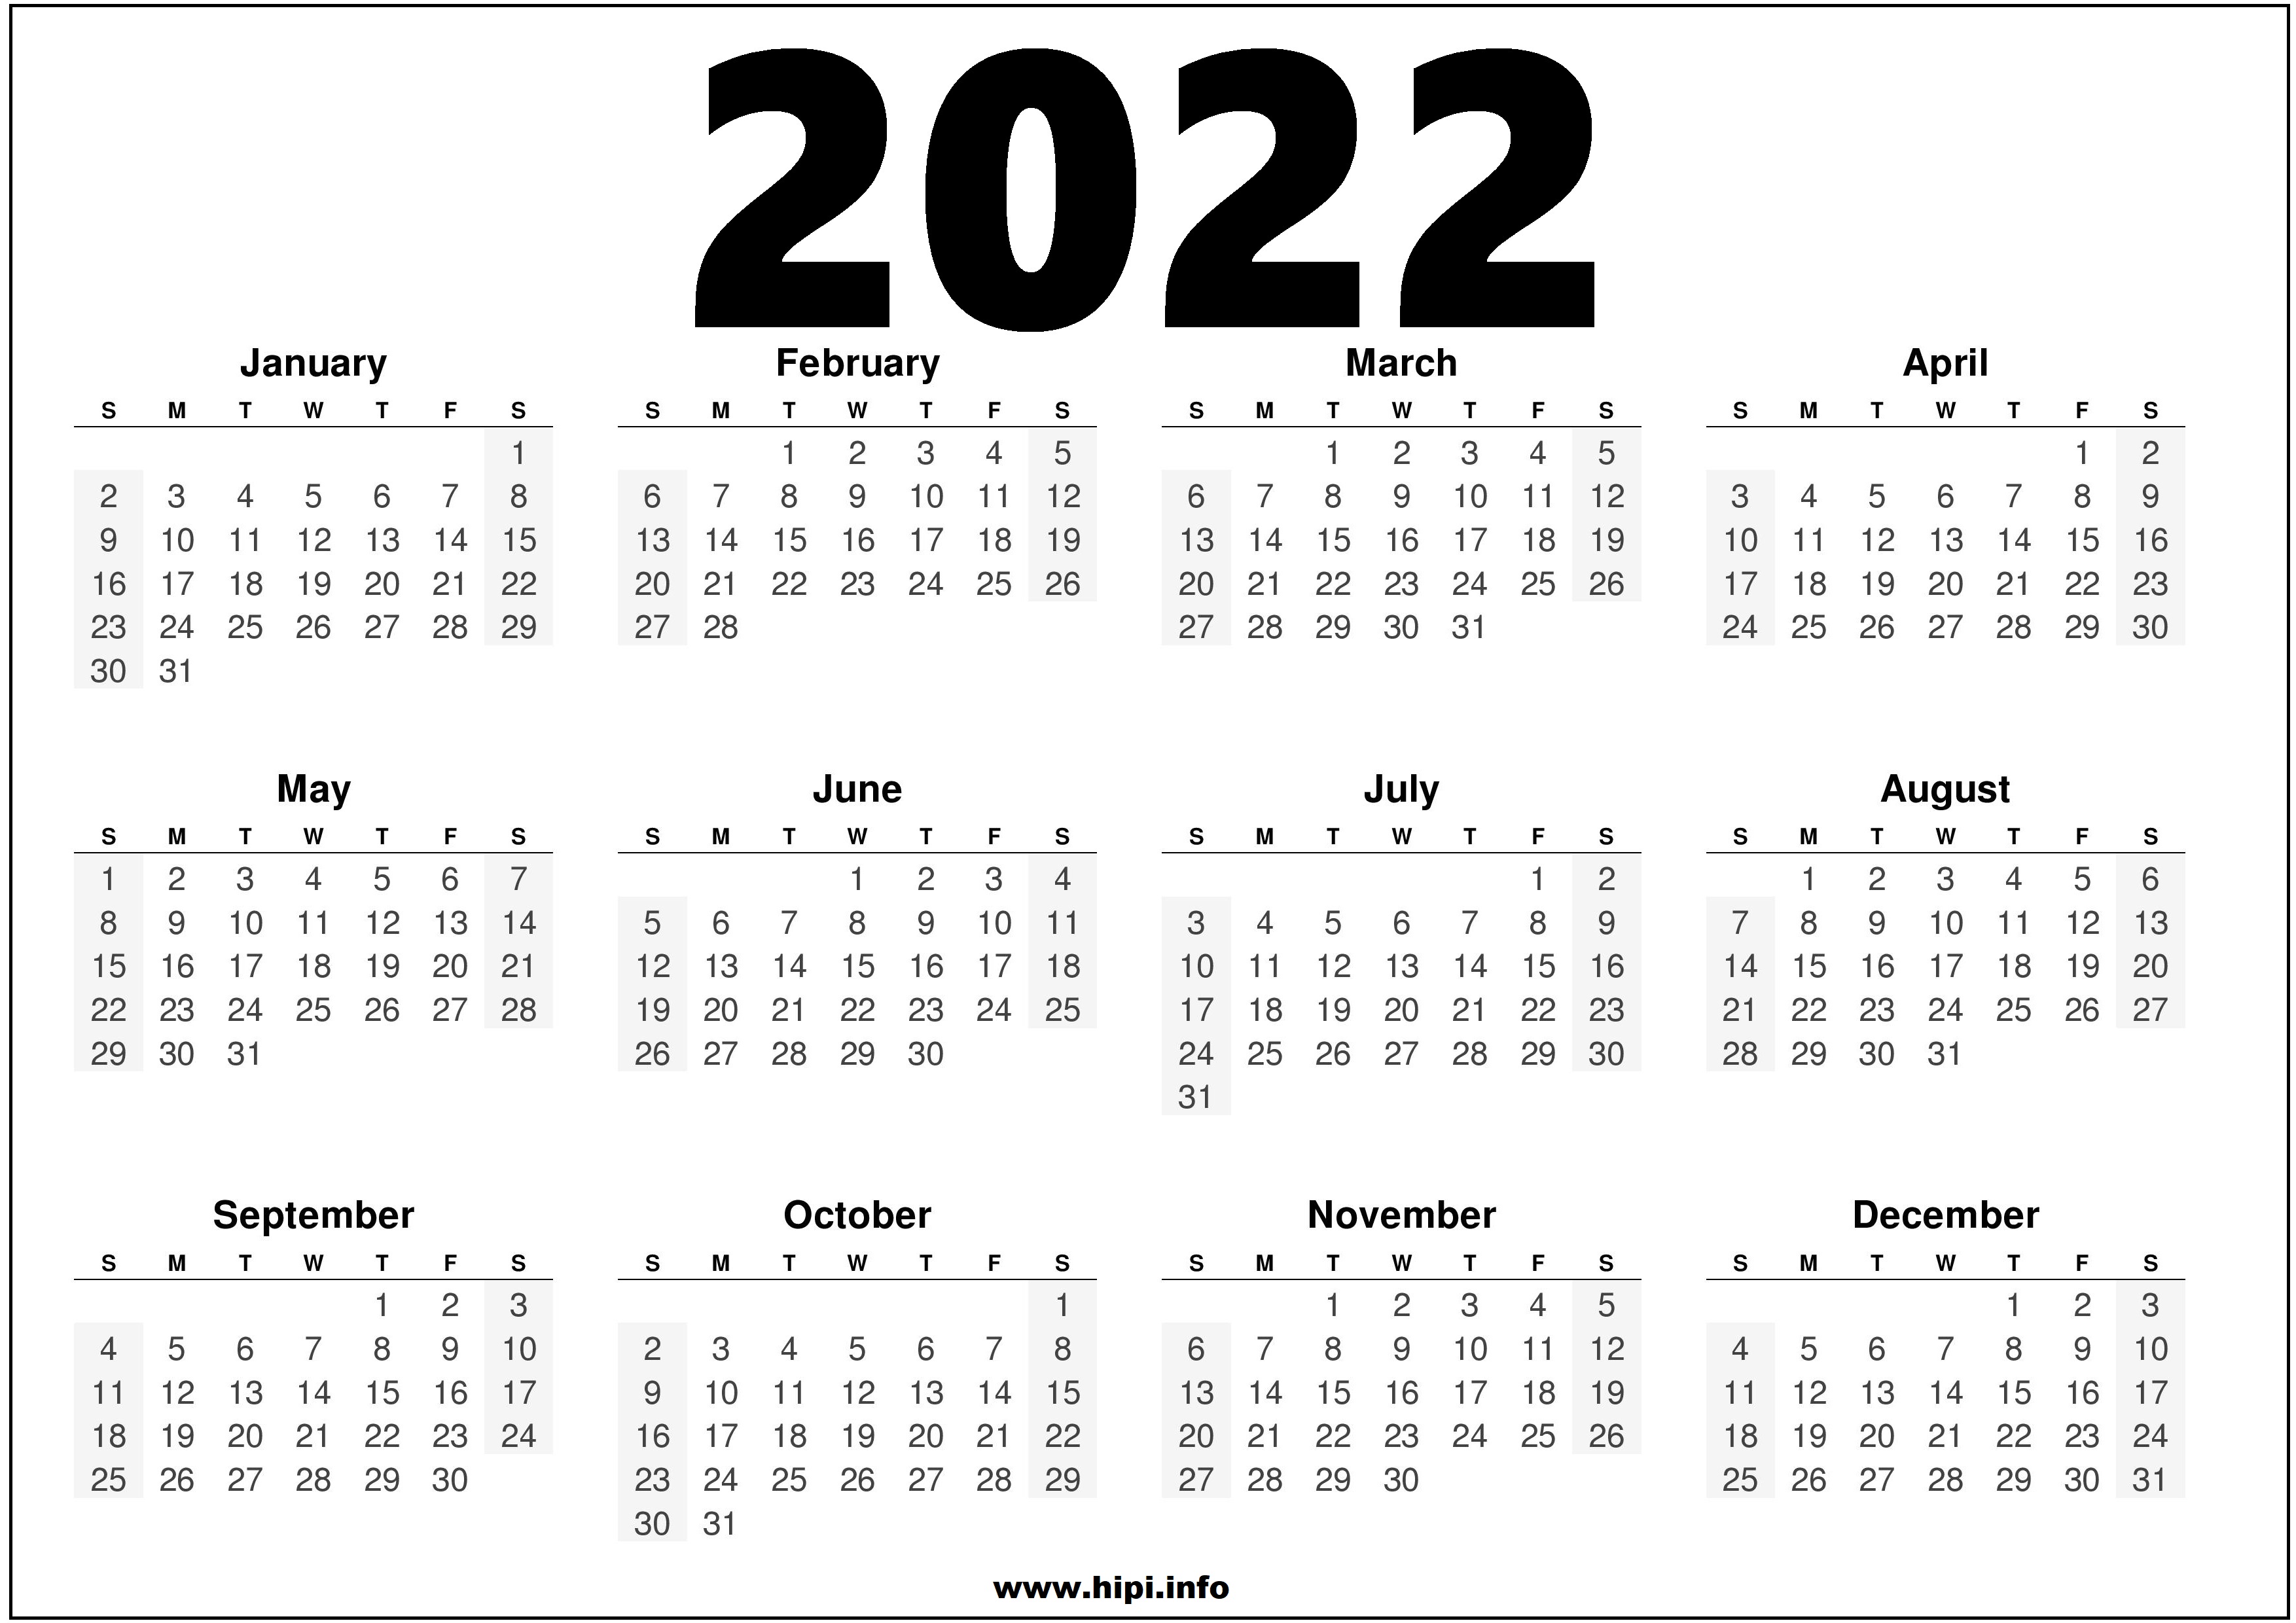 Free Calendar Download 2022 2022 Printable Calendar Us Free Download - Hipi.info | Calendars Printable  Free